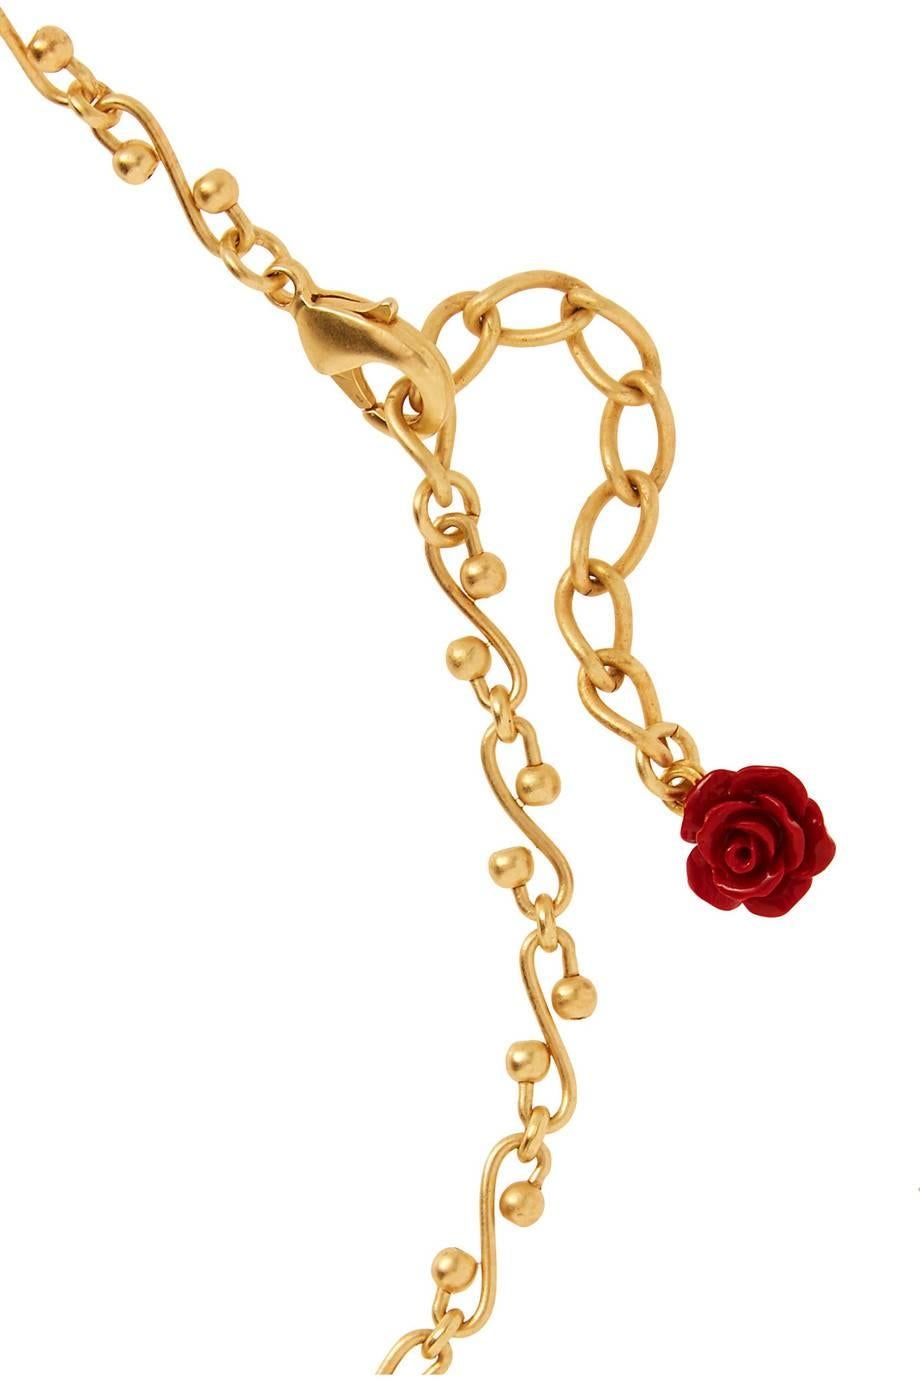 Dolce & Gabbana NEW Swarovski Crystal Gold Rose Pendant Necklace 1